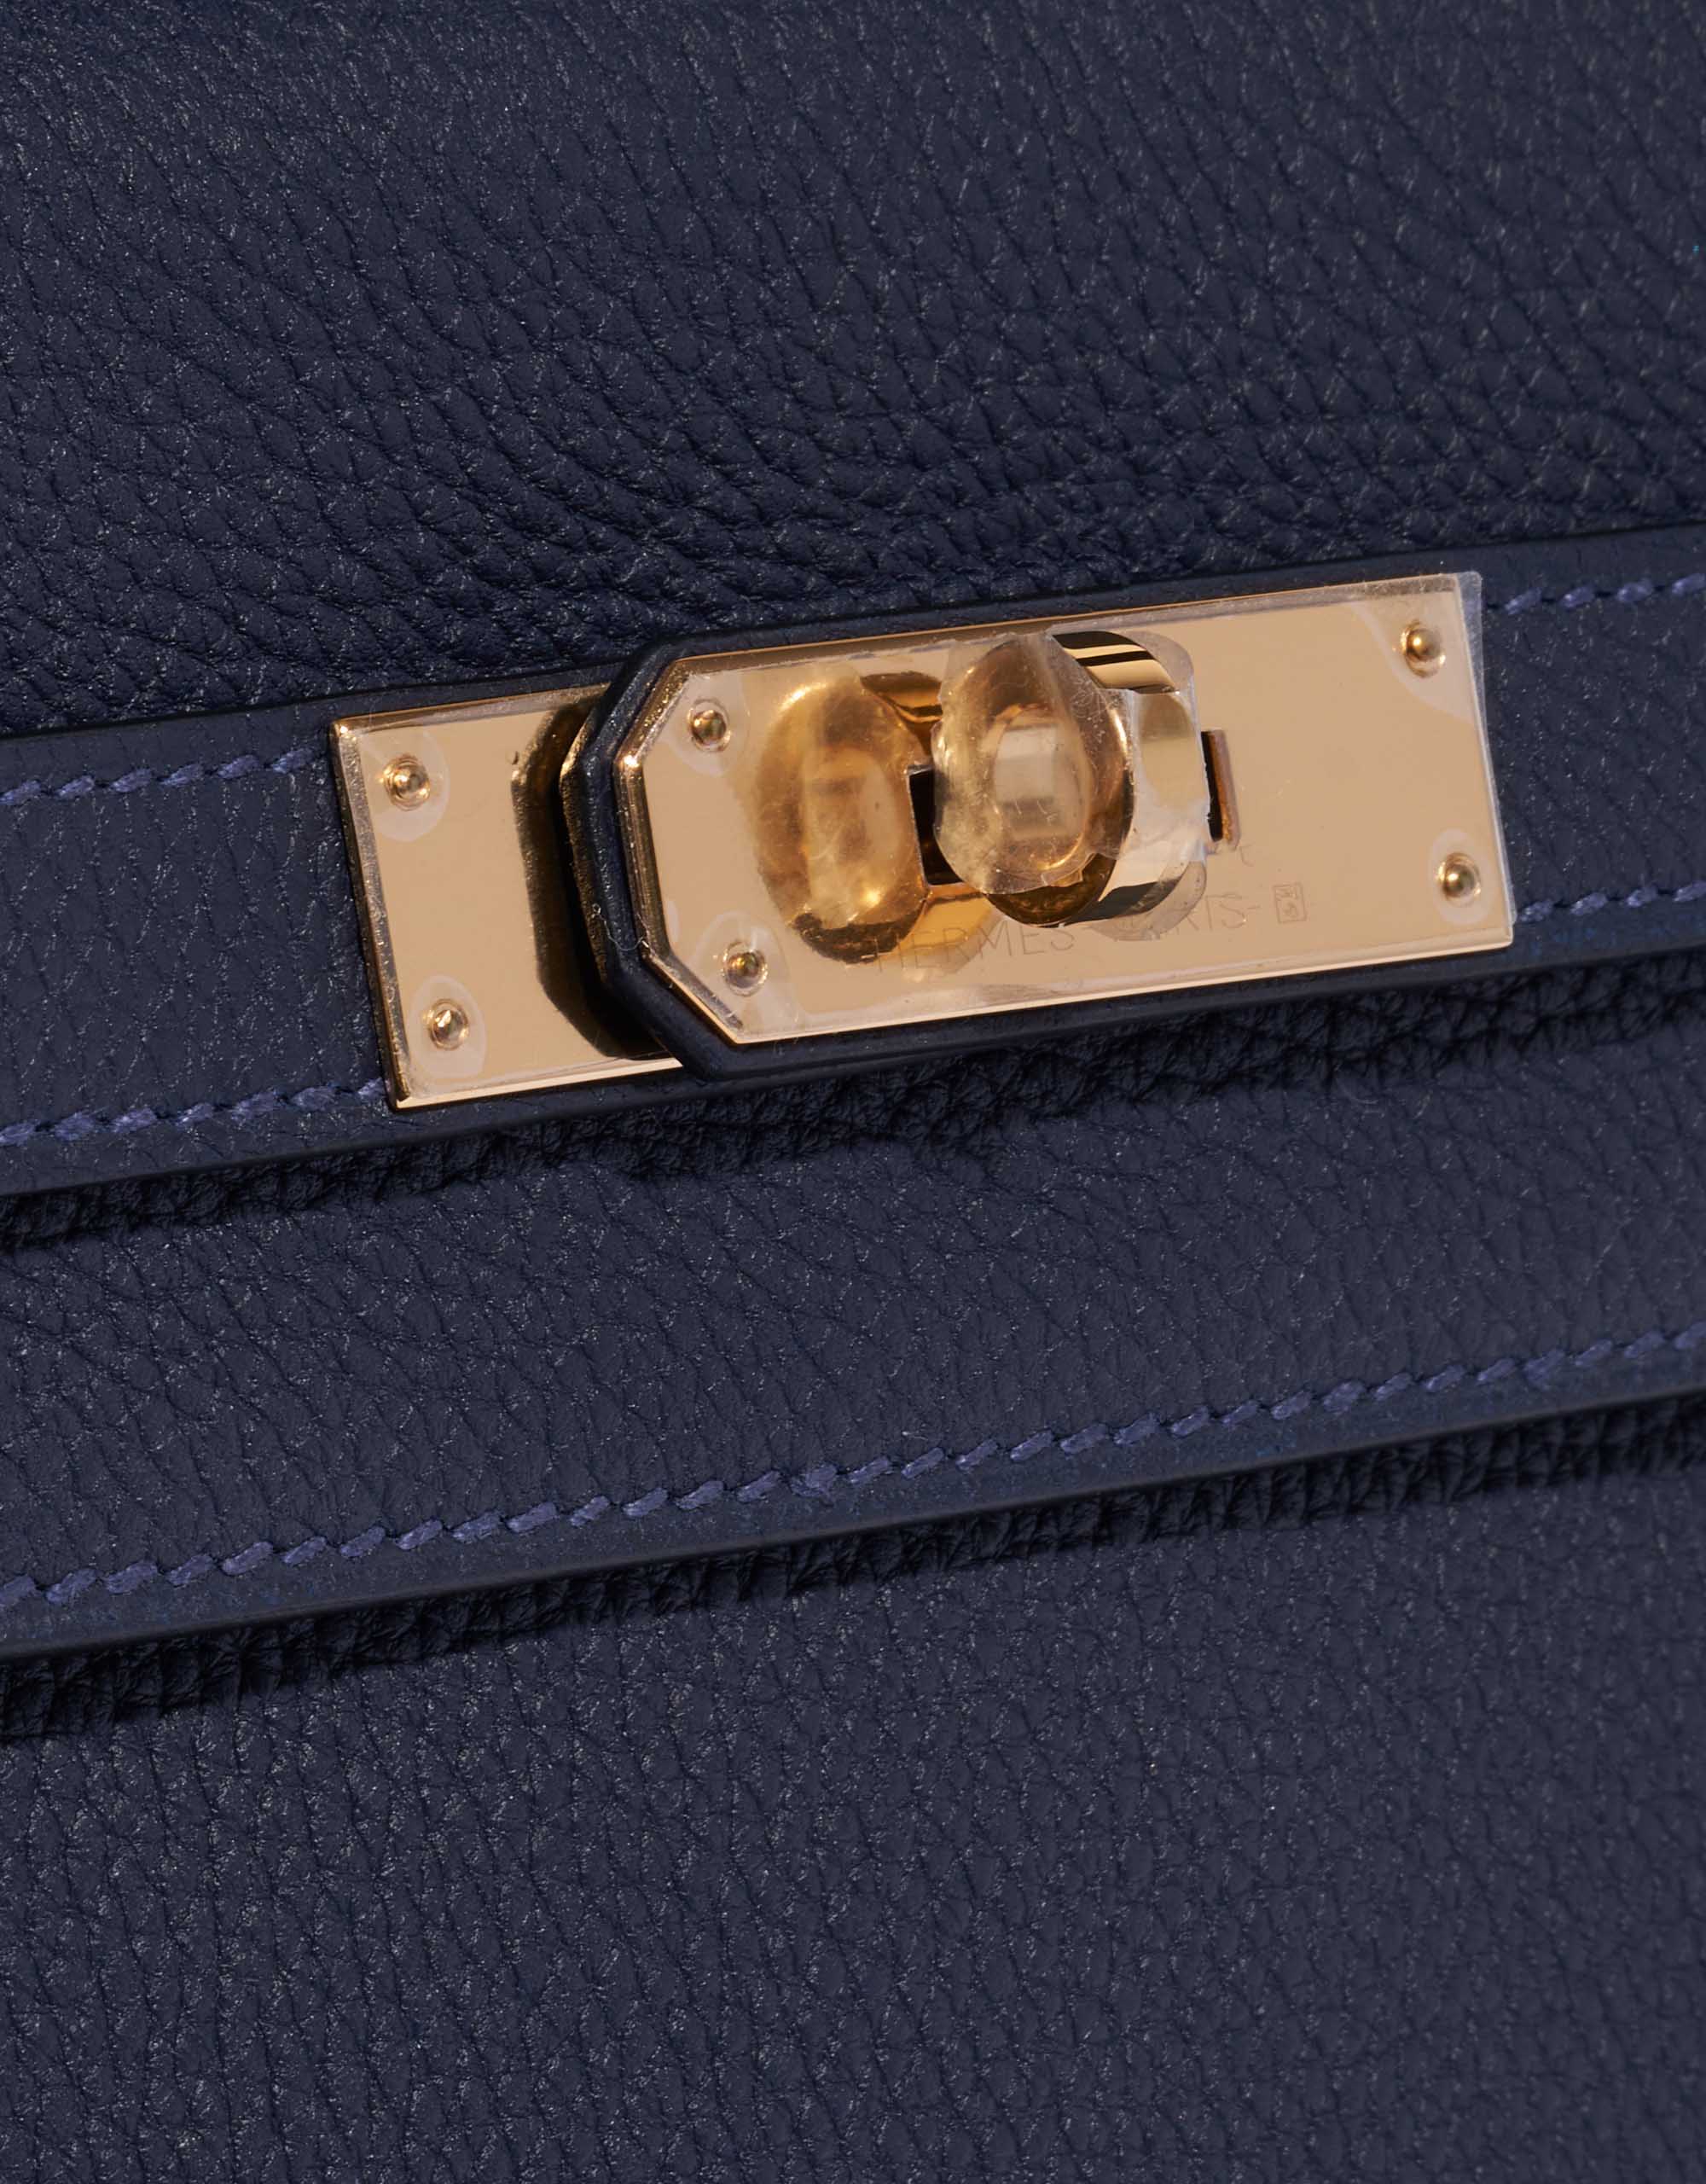 Kelly 28 leather handbag Hermès Blue in Leather - 24745110